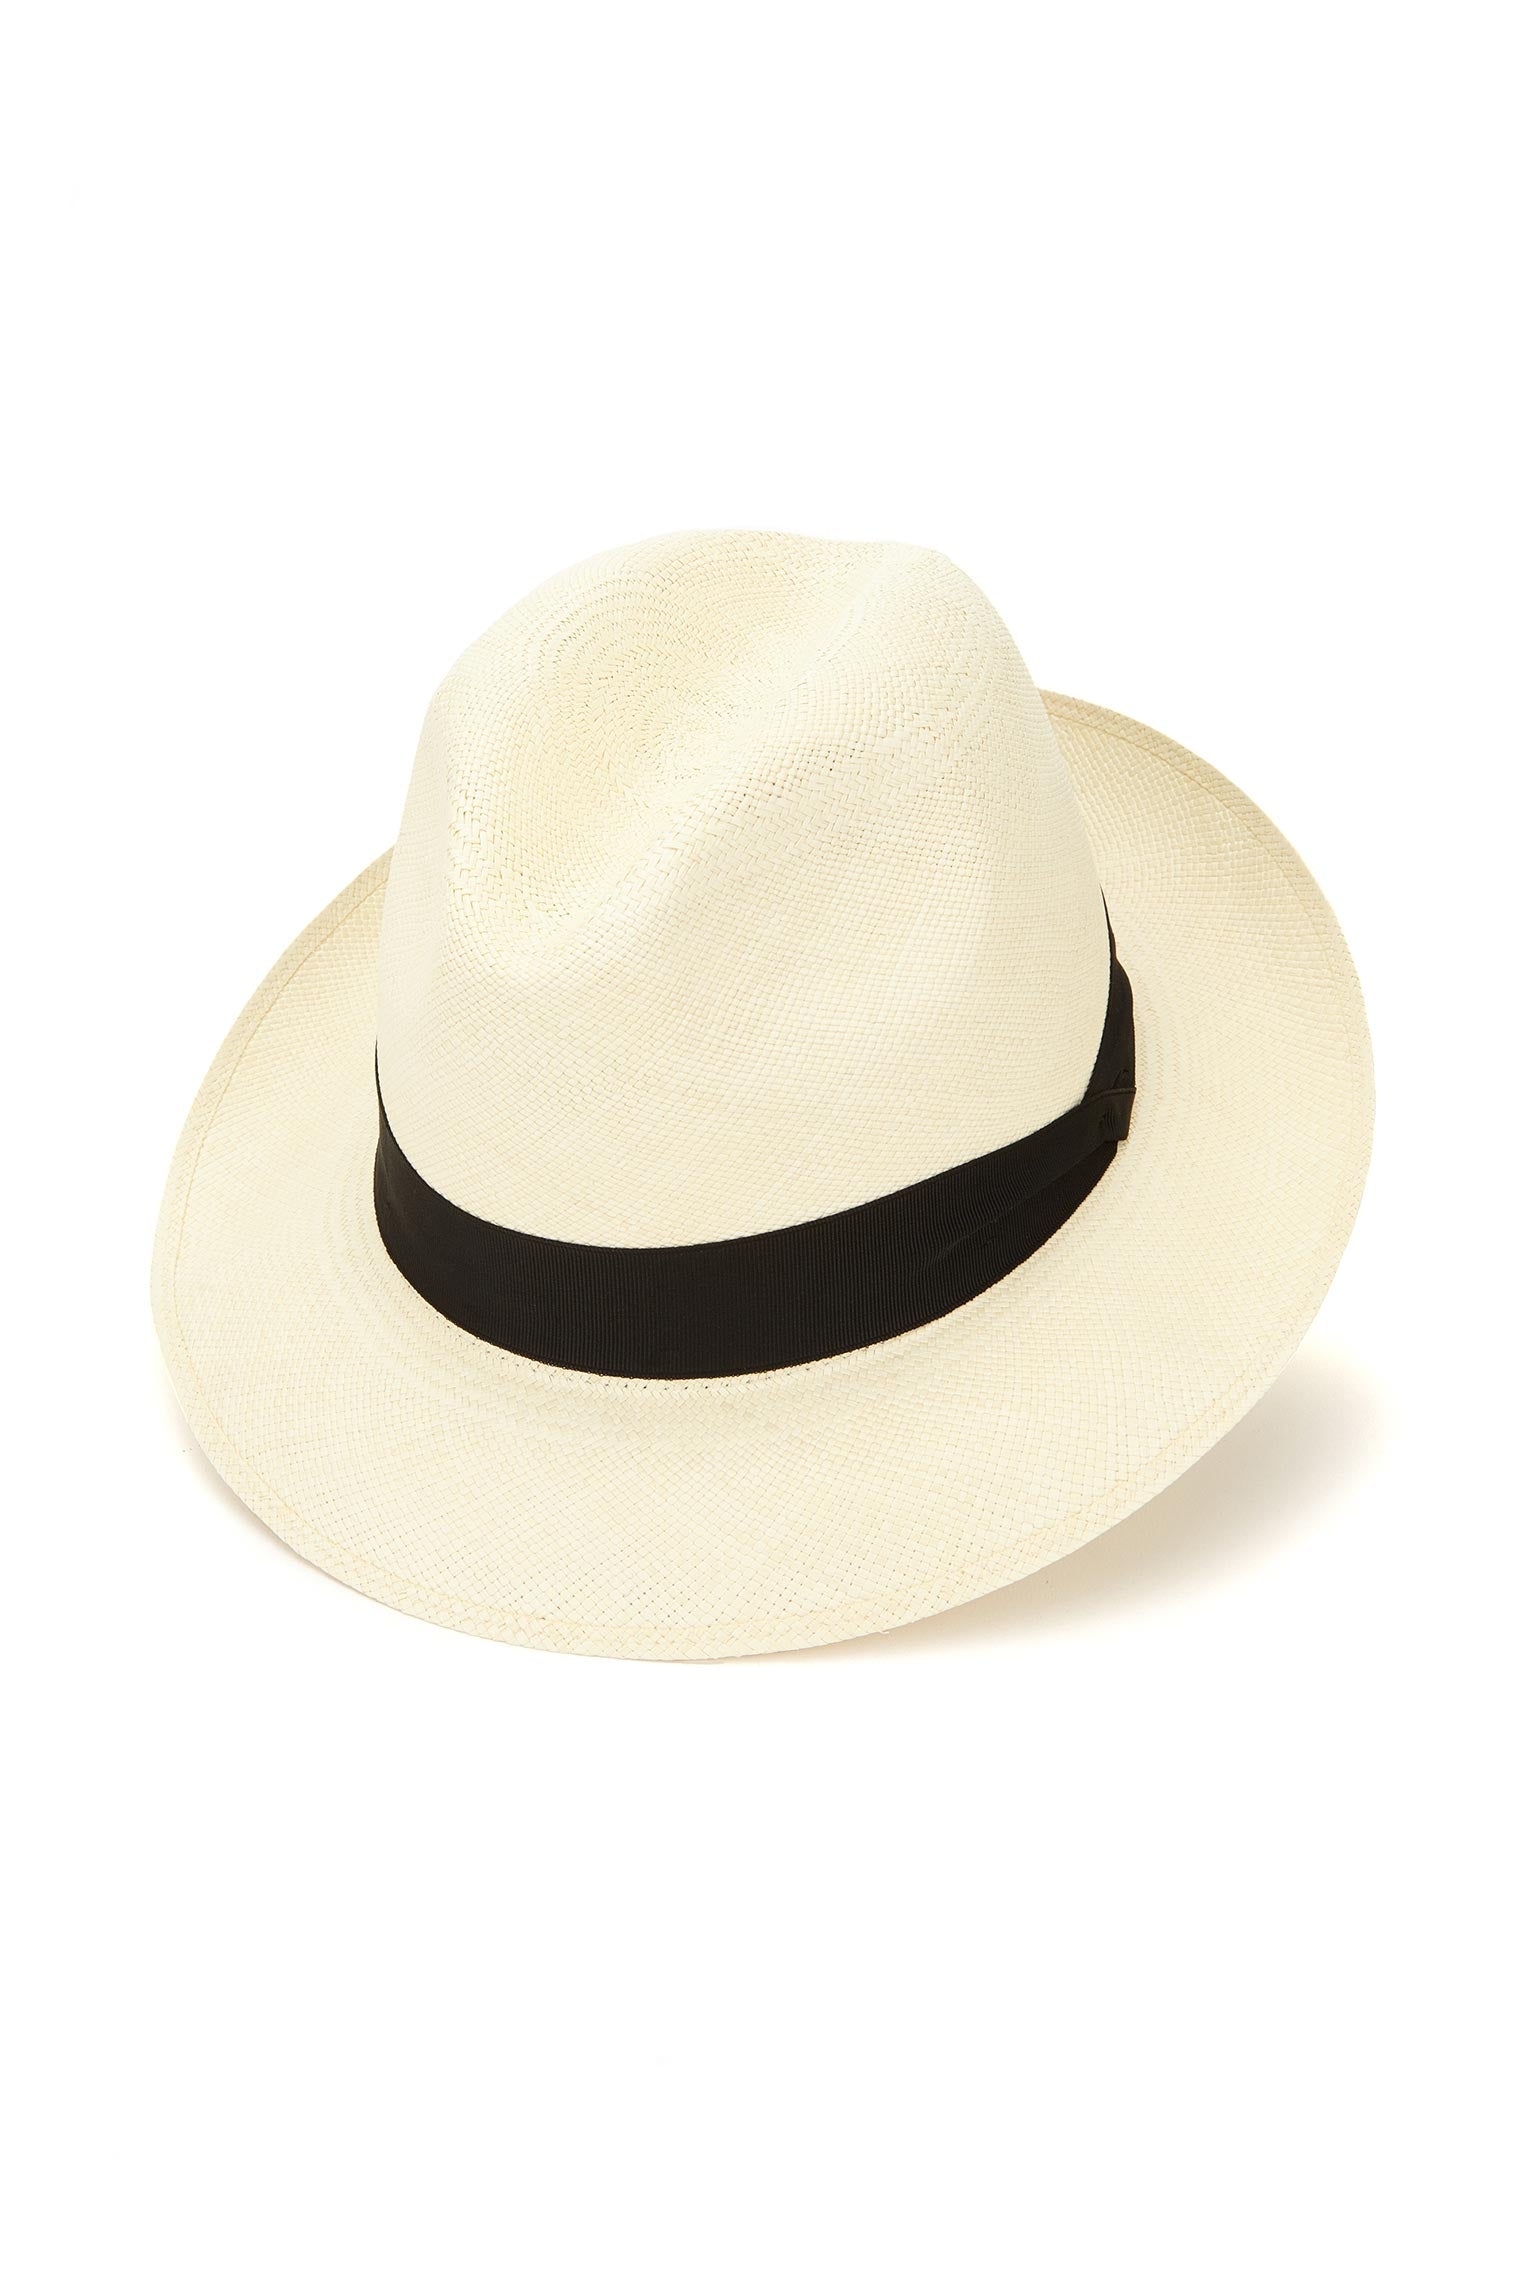 Classic Panama - Panama Hats - Lock & Co. Hatters London UK